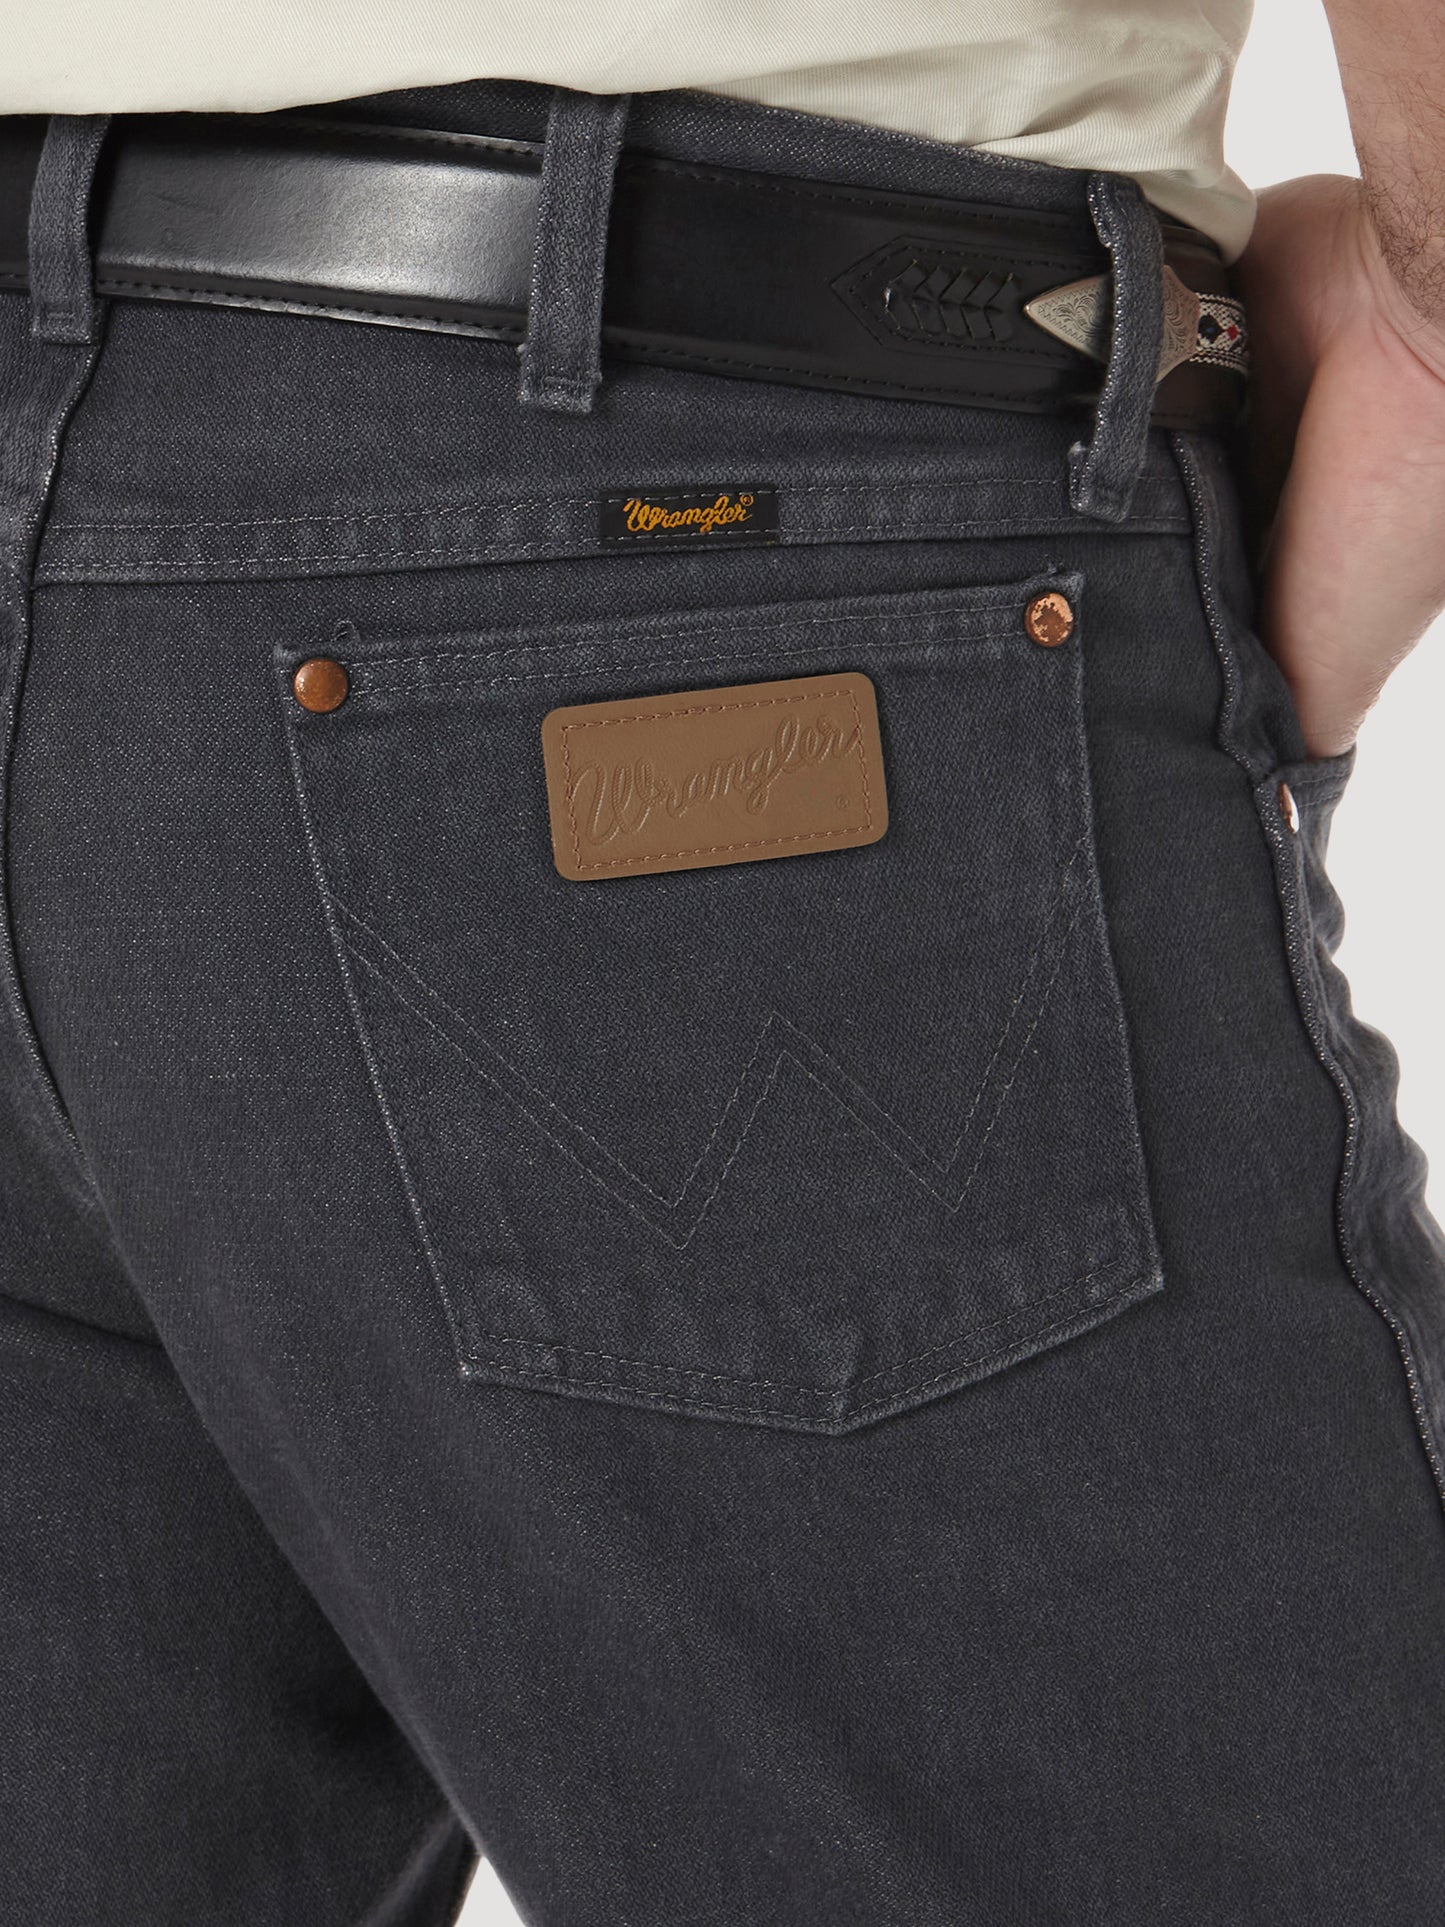 Wrangler USA Mens Cowboy Cut Original Fit Jeans - Charcoal Grey - 13MWZCG36